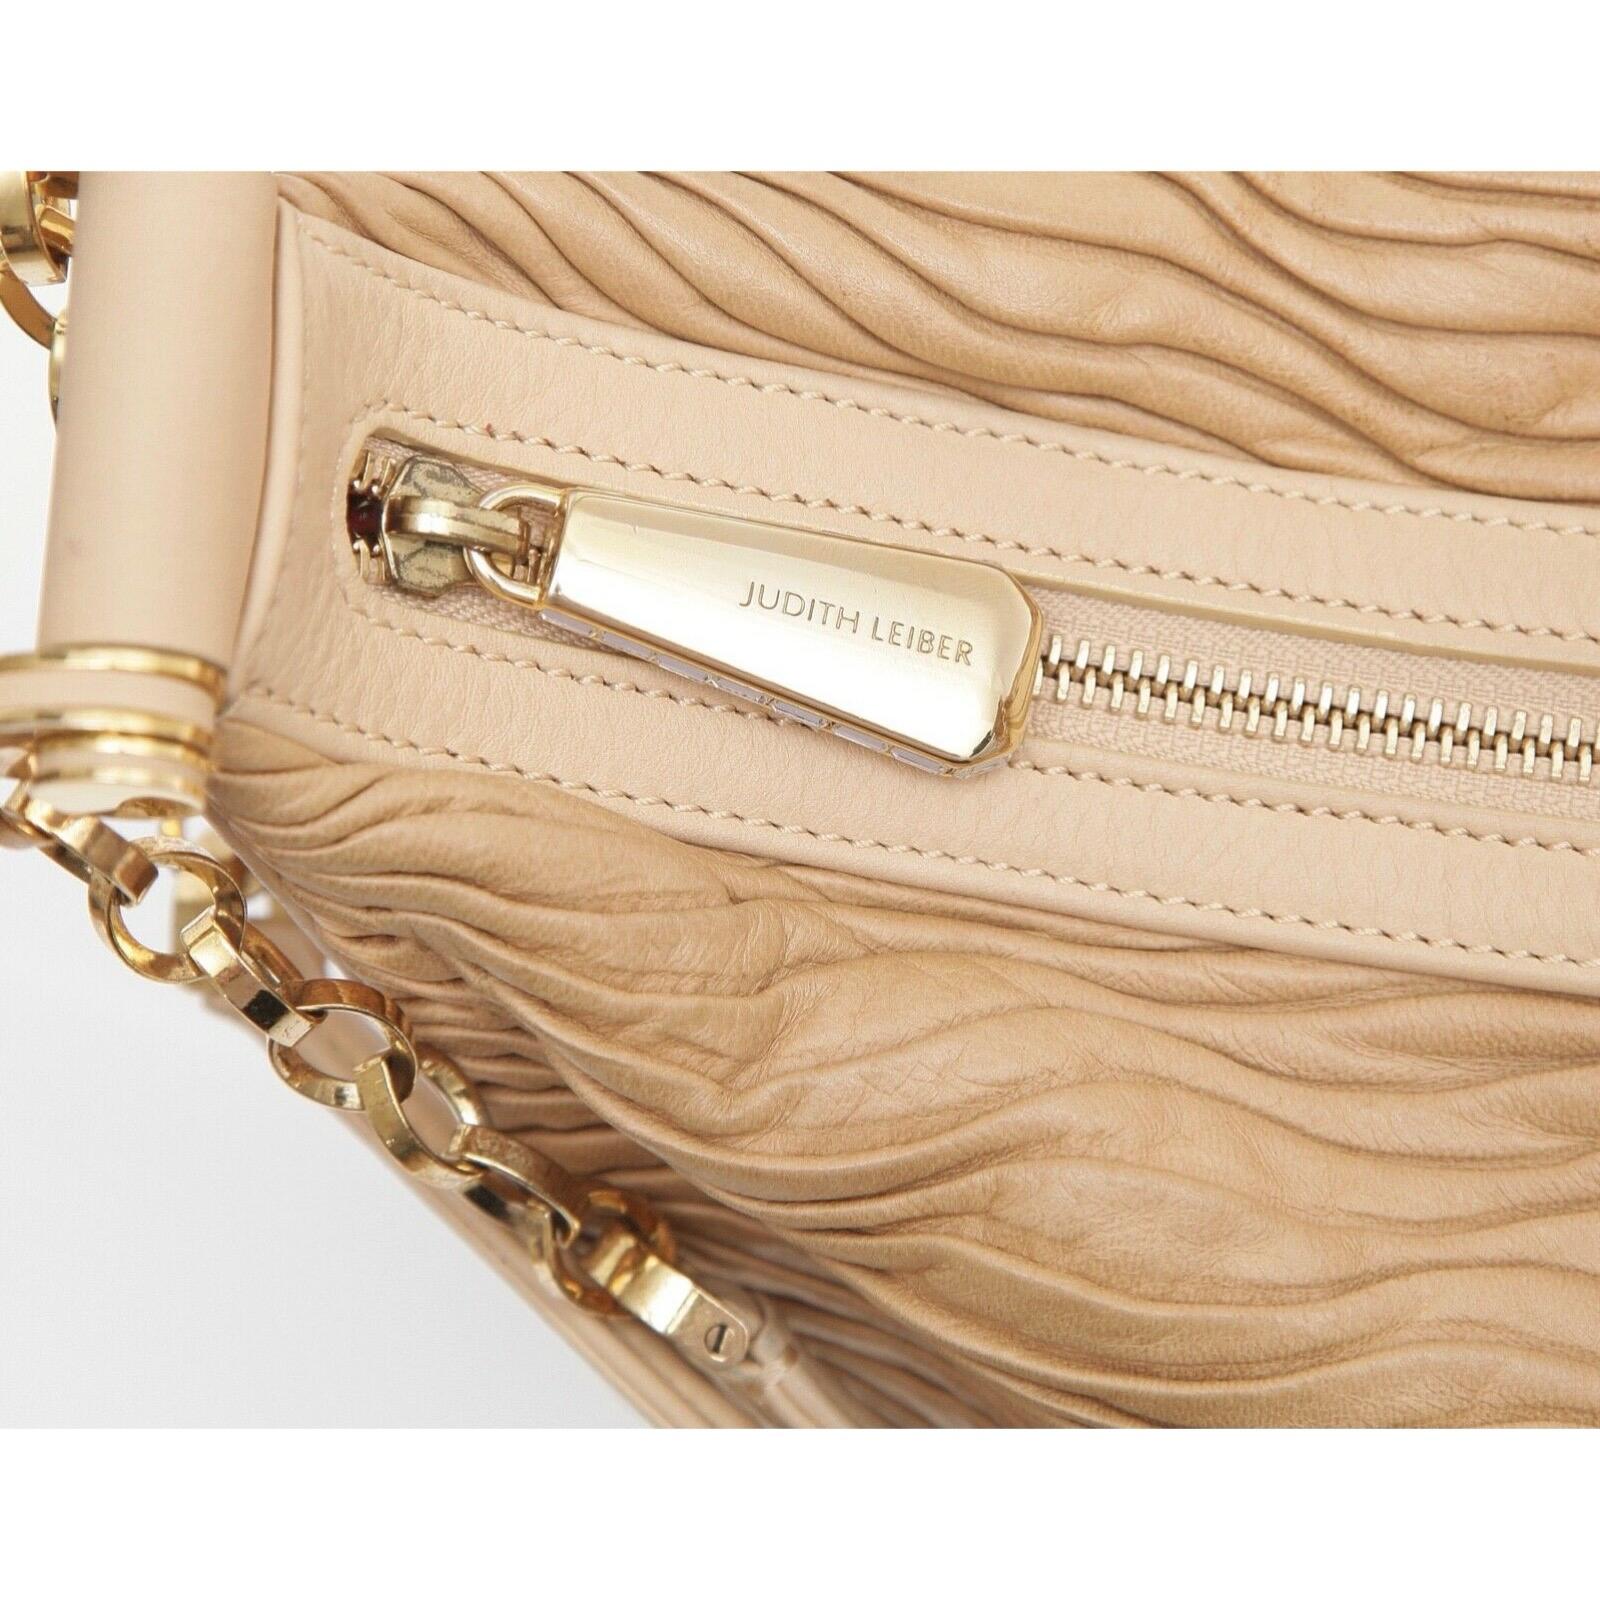 Women's JUDITH LEIBER Leather Shoulder Bag Hobo Beige Gold-Tone HW Crystal Top Zipper For Sale